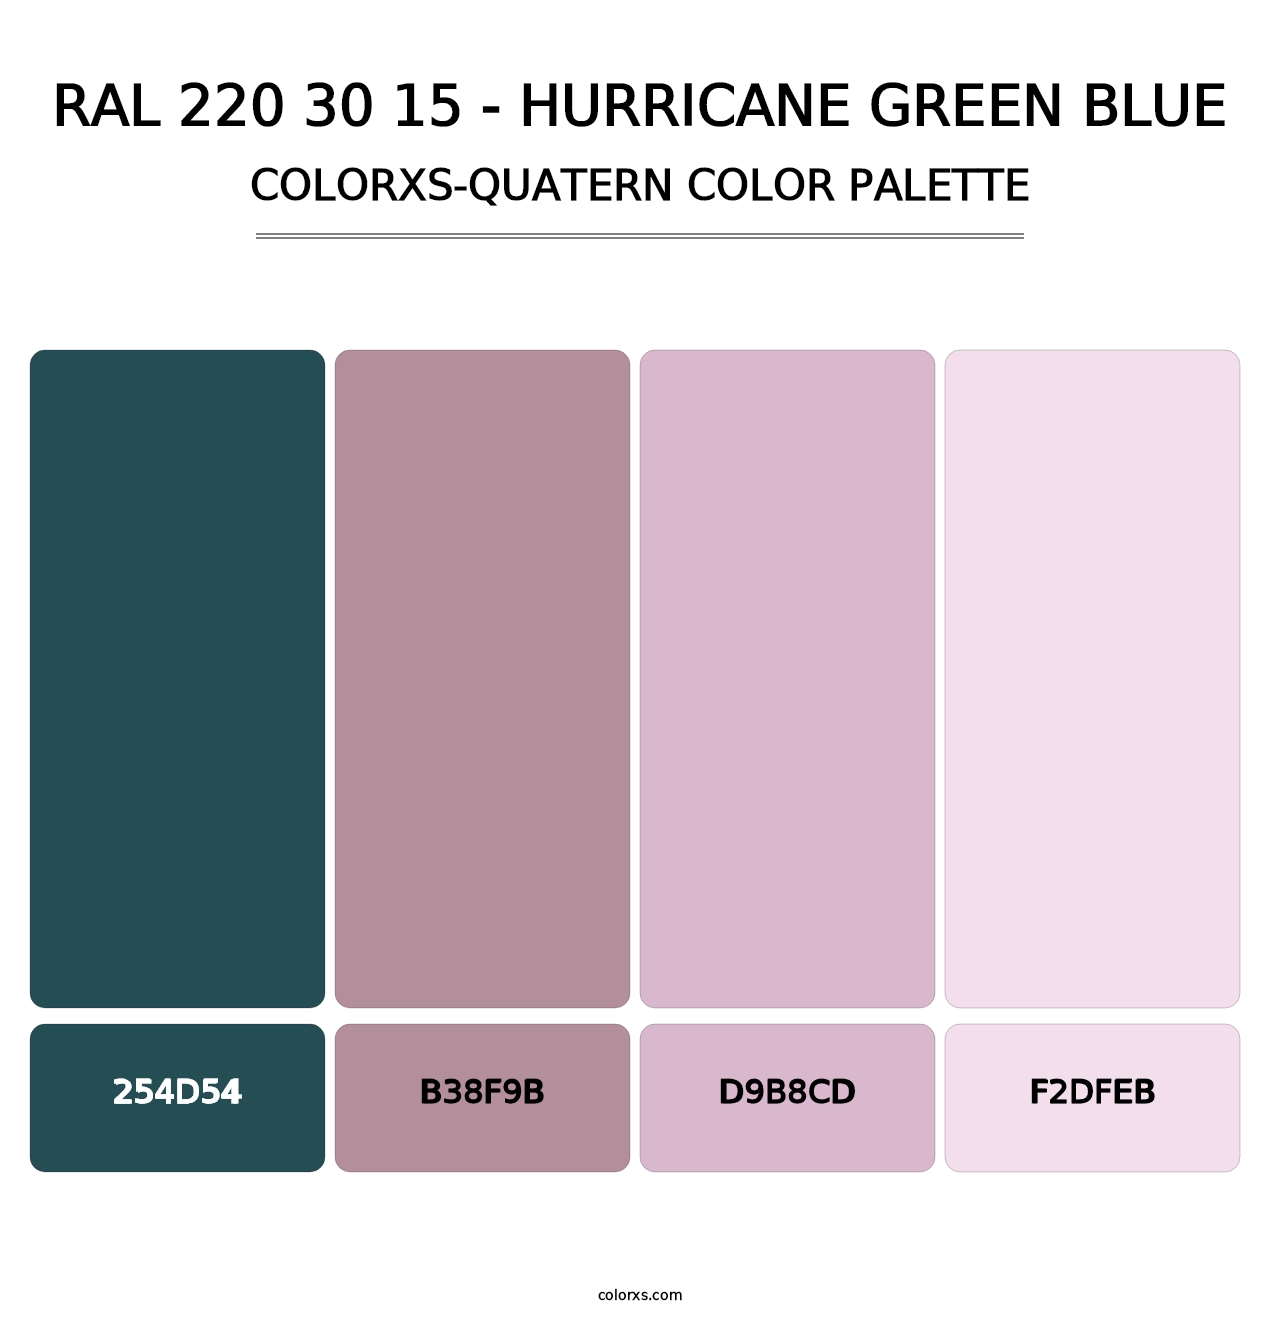 RAL 220 30 15 - Hurricane Green Blue - Colorxs Quatern Palette